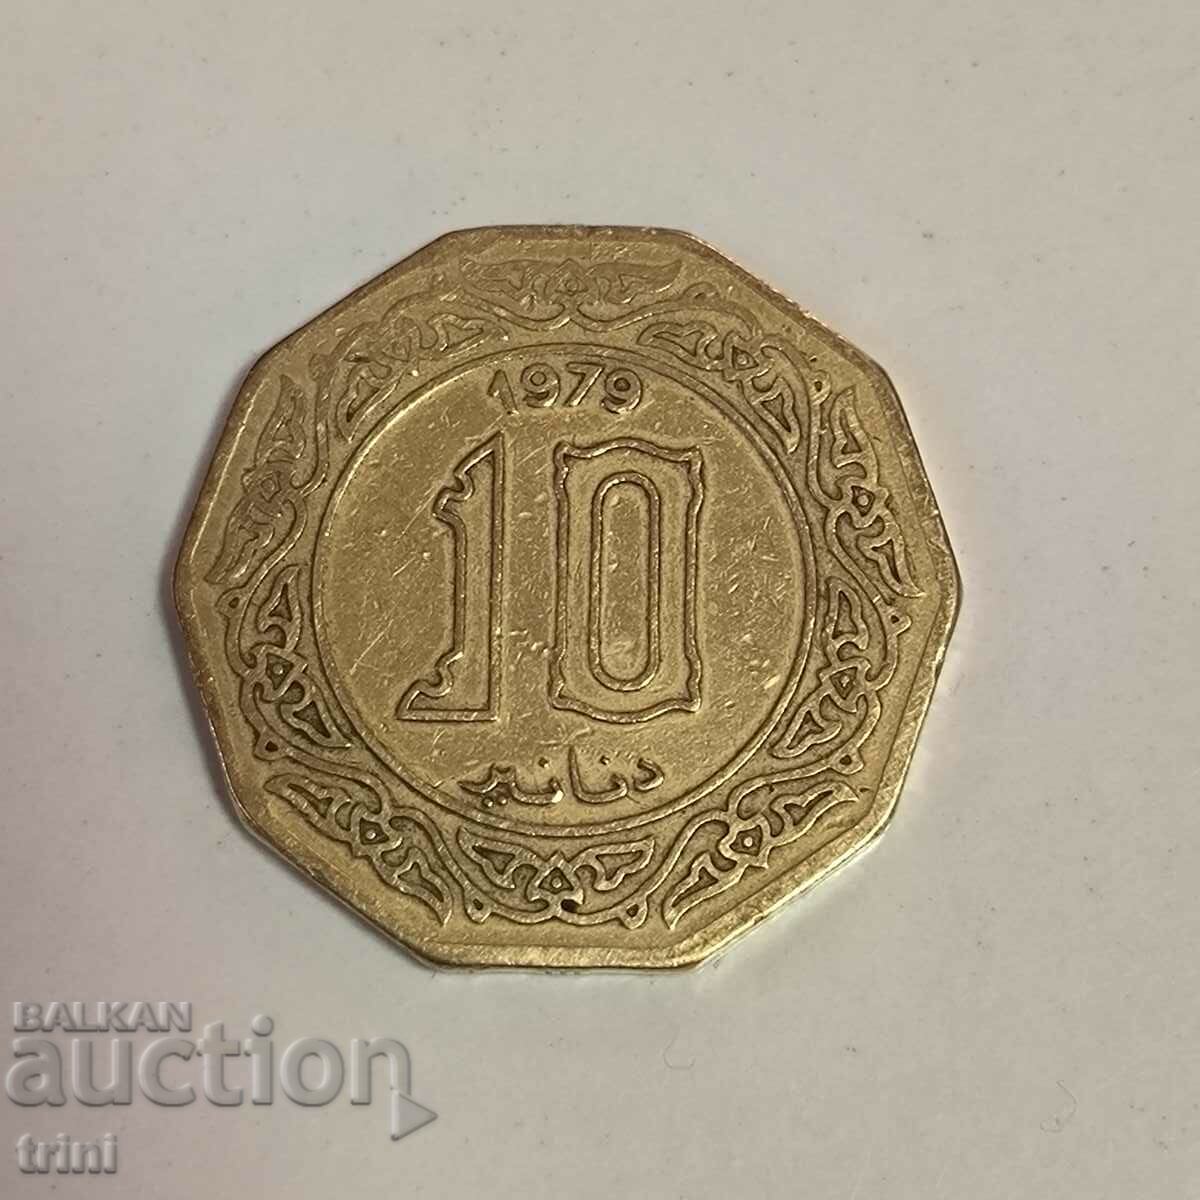 Algeria 10 dinari 1979 anul g32